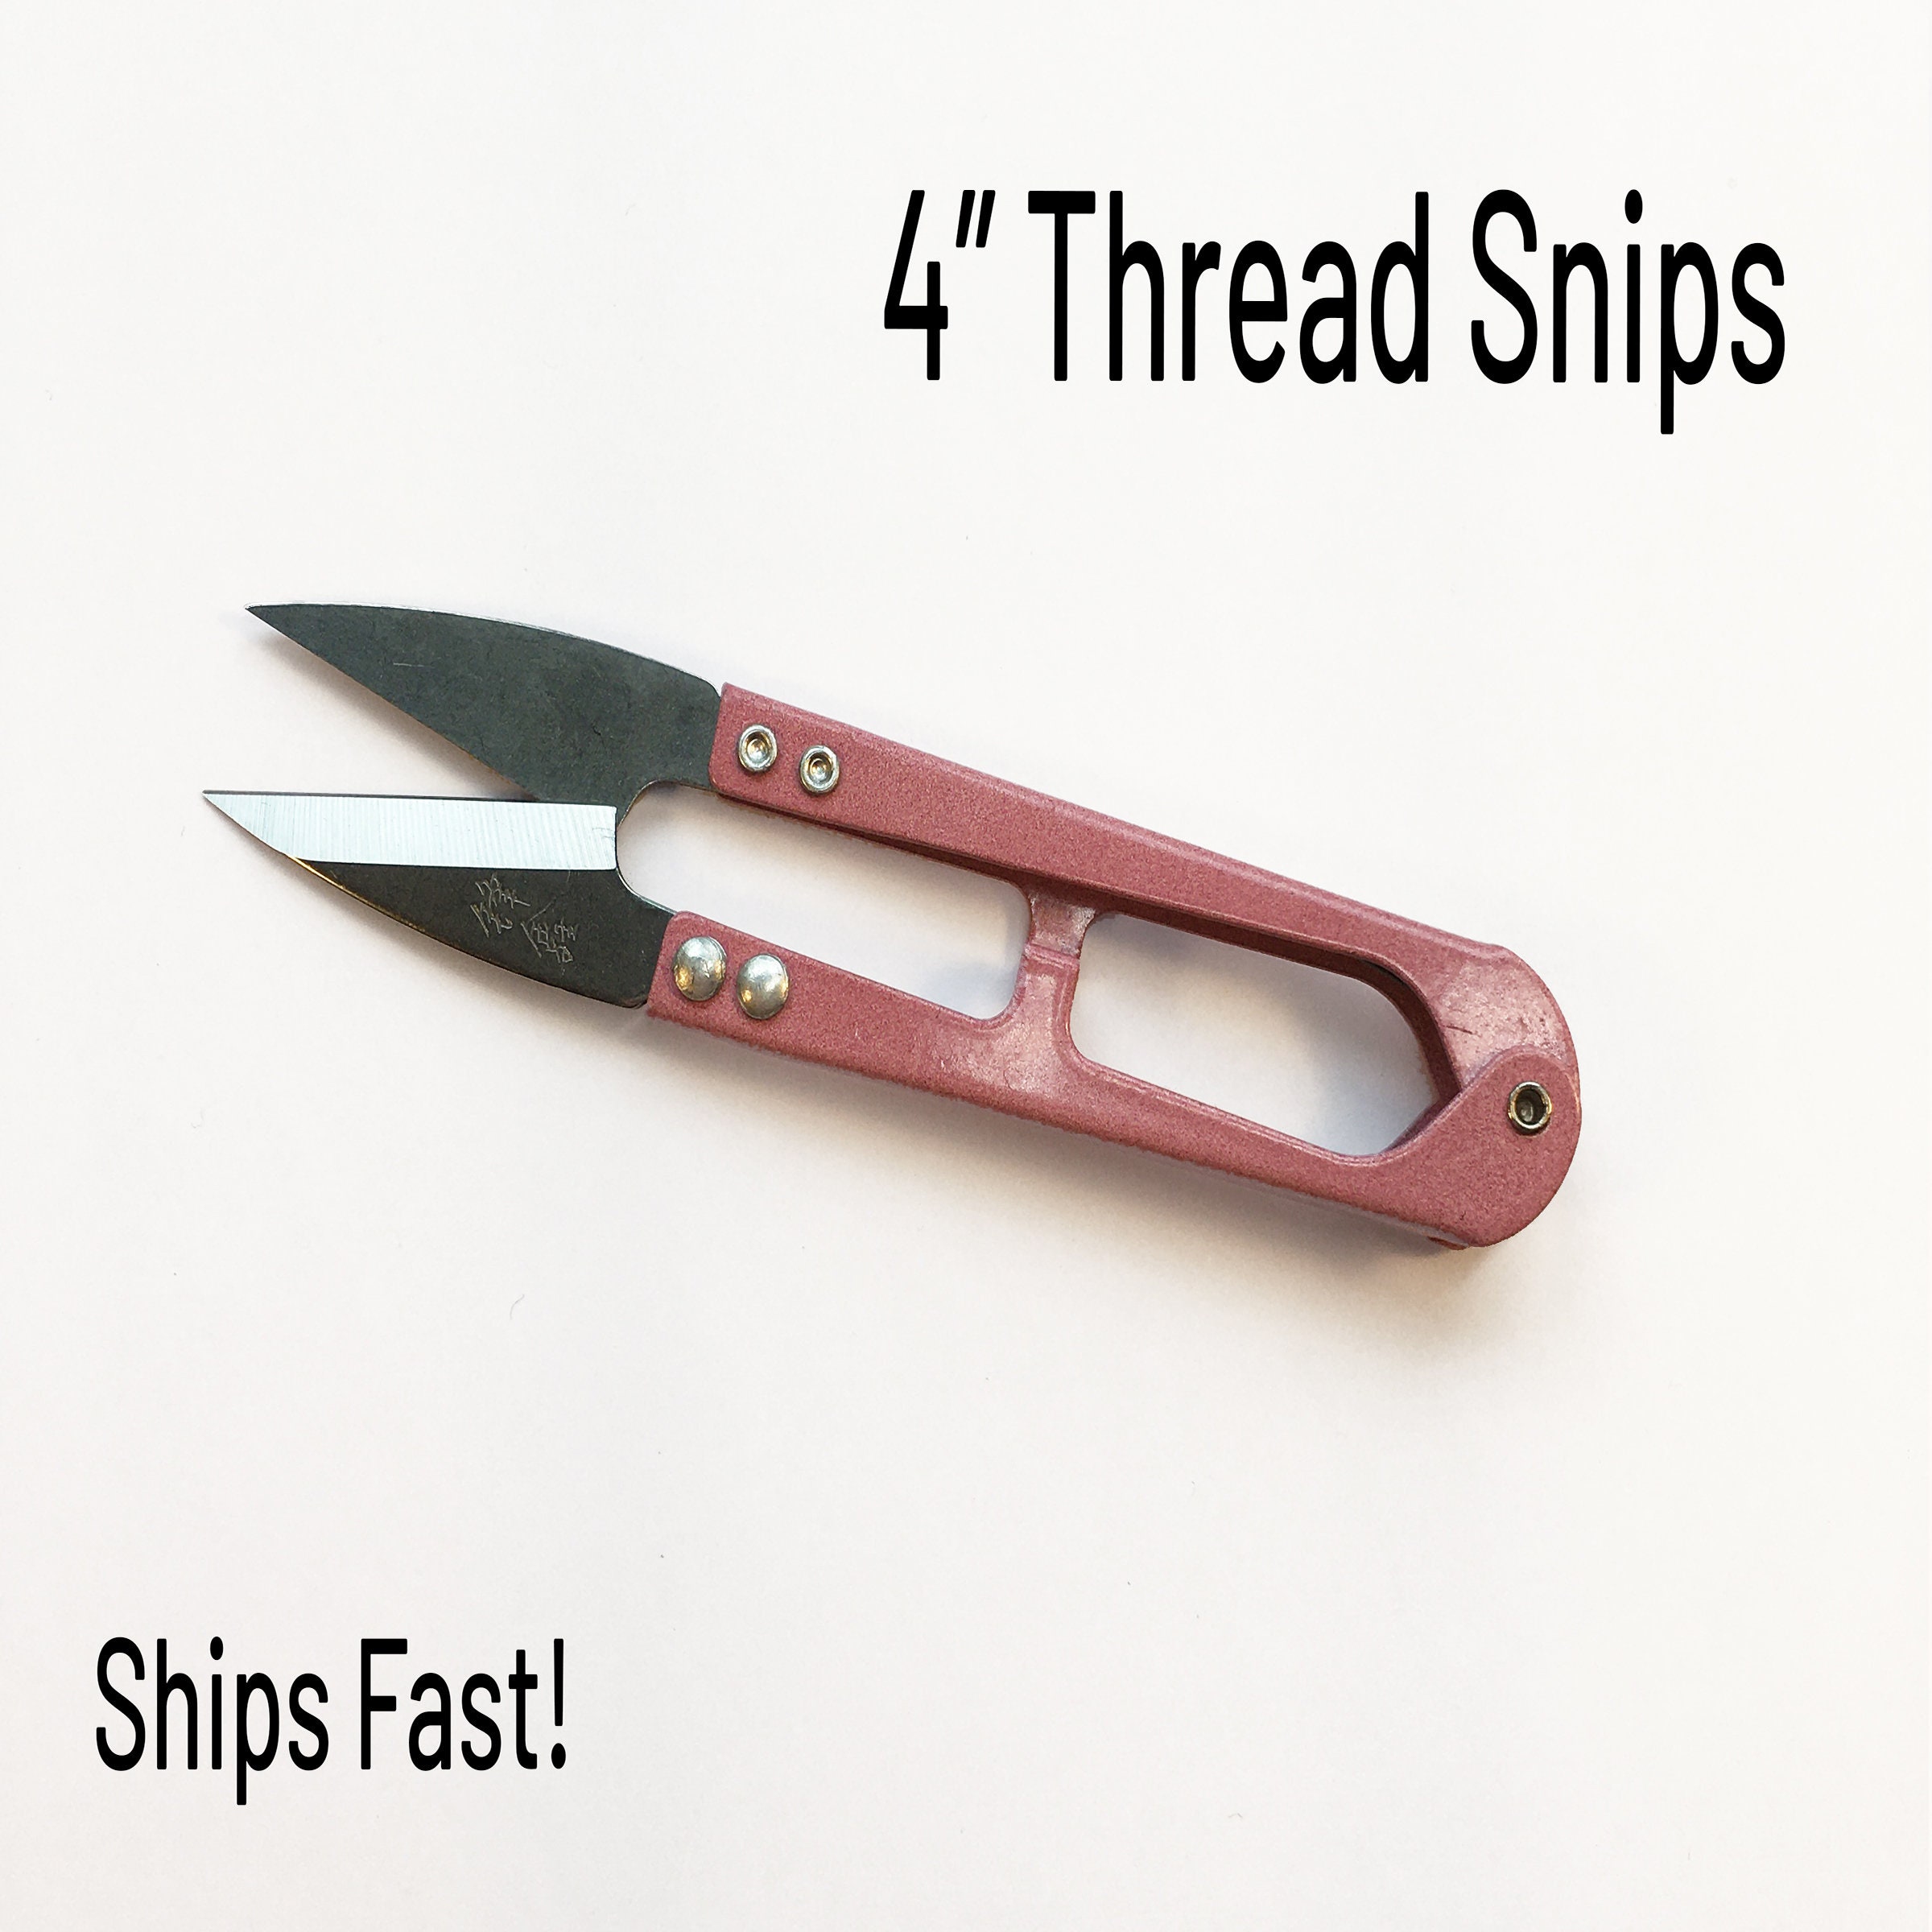 Thread snips / thread scissors, professional heavy-duty by Beadsmith